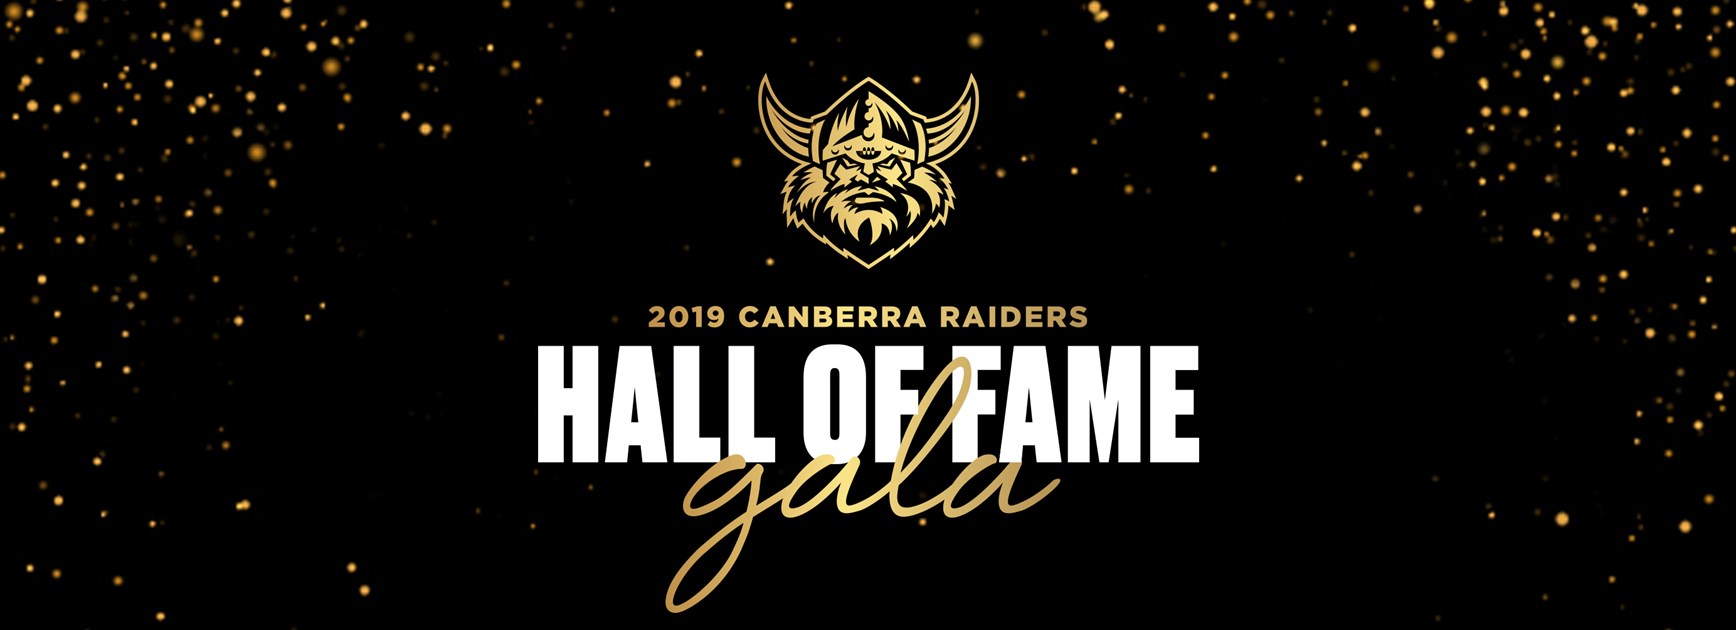 Canberra Raiders host inaugural Hall of Fame Gala